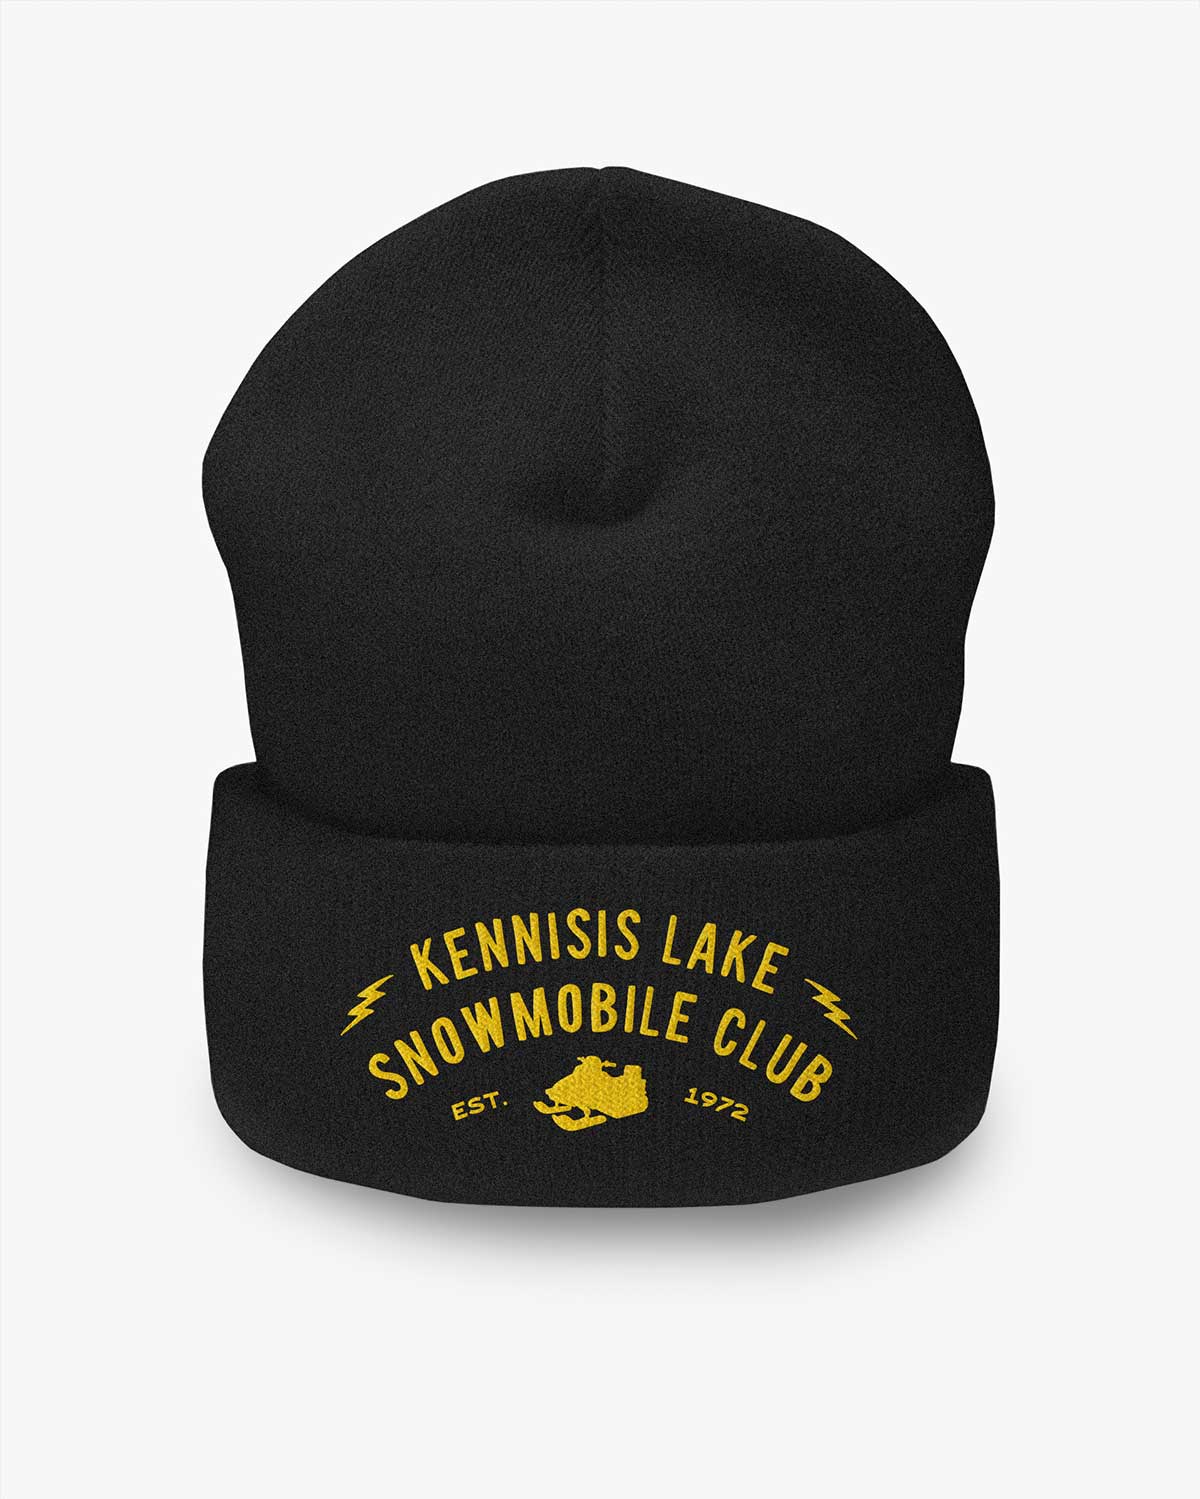 Snowmobile Club - Kennisis Lake - Toque